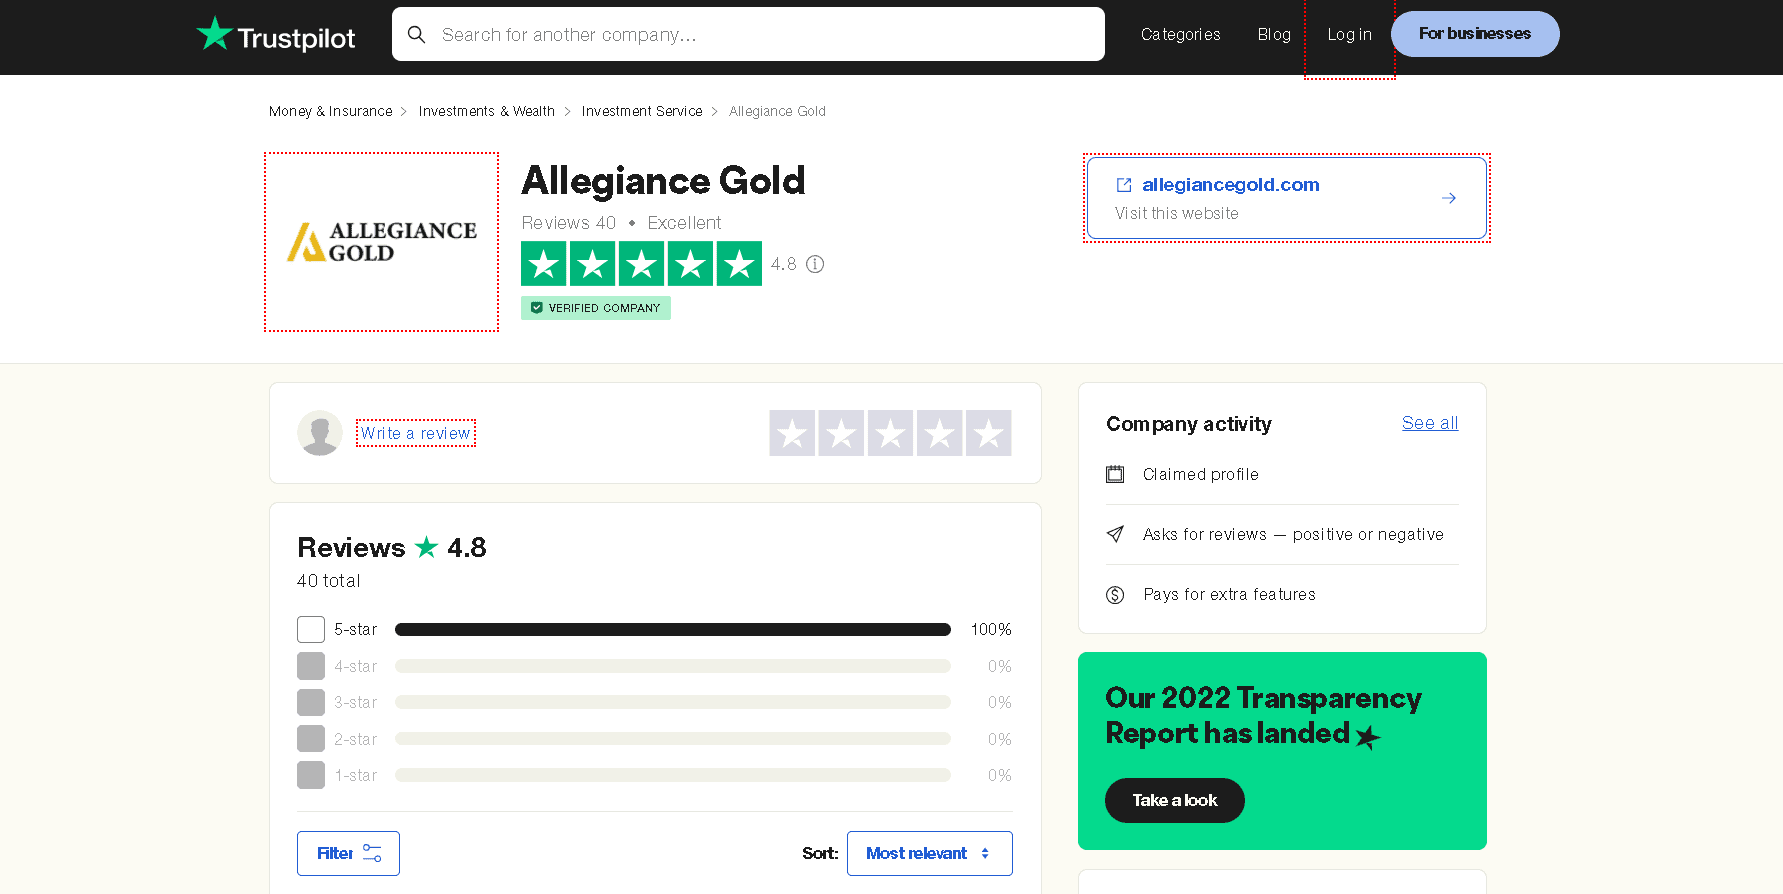 Allegiance Gold Trustpilot profile and customer reviews